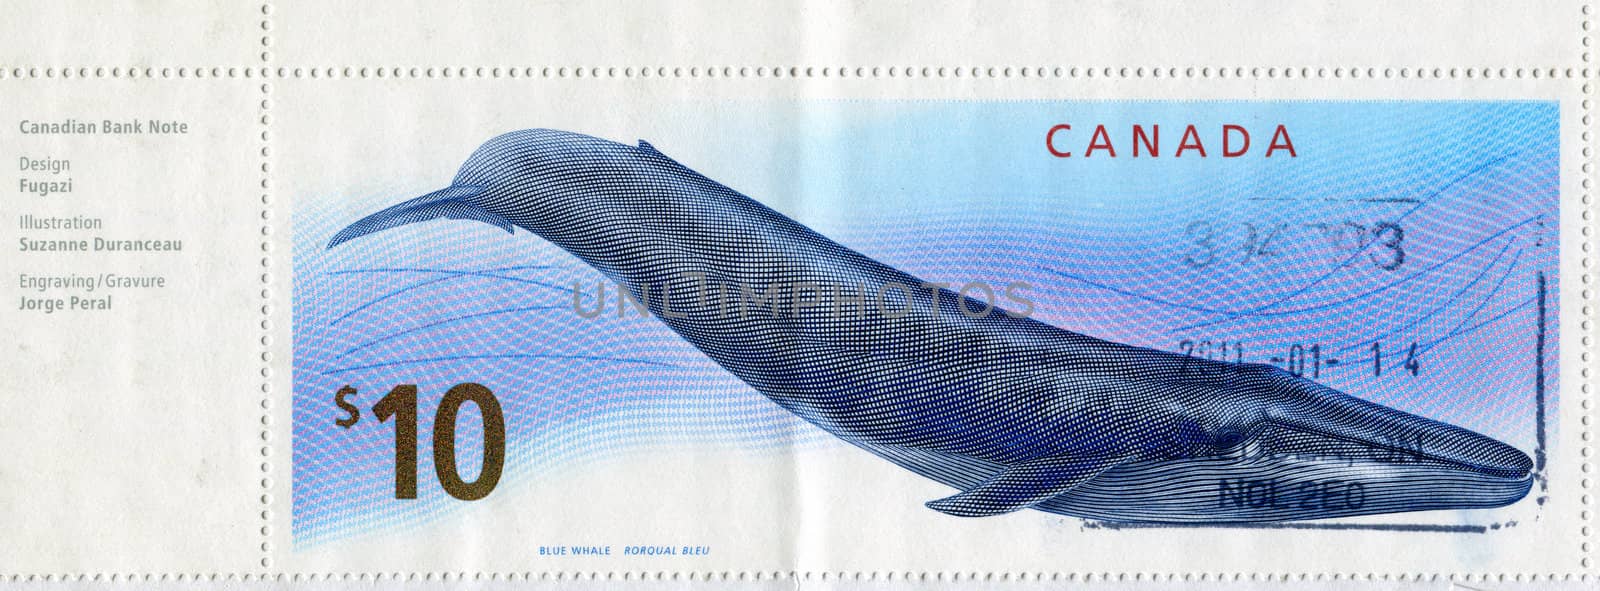 CANADA - CIRCA 2001: stamp printed by Canada, shows whale, circa 2011